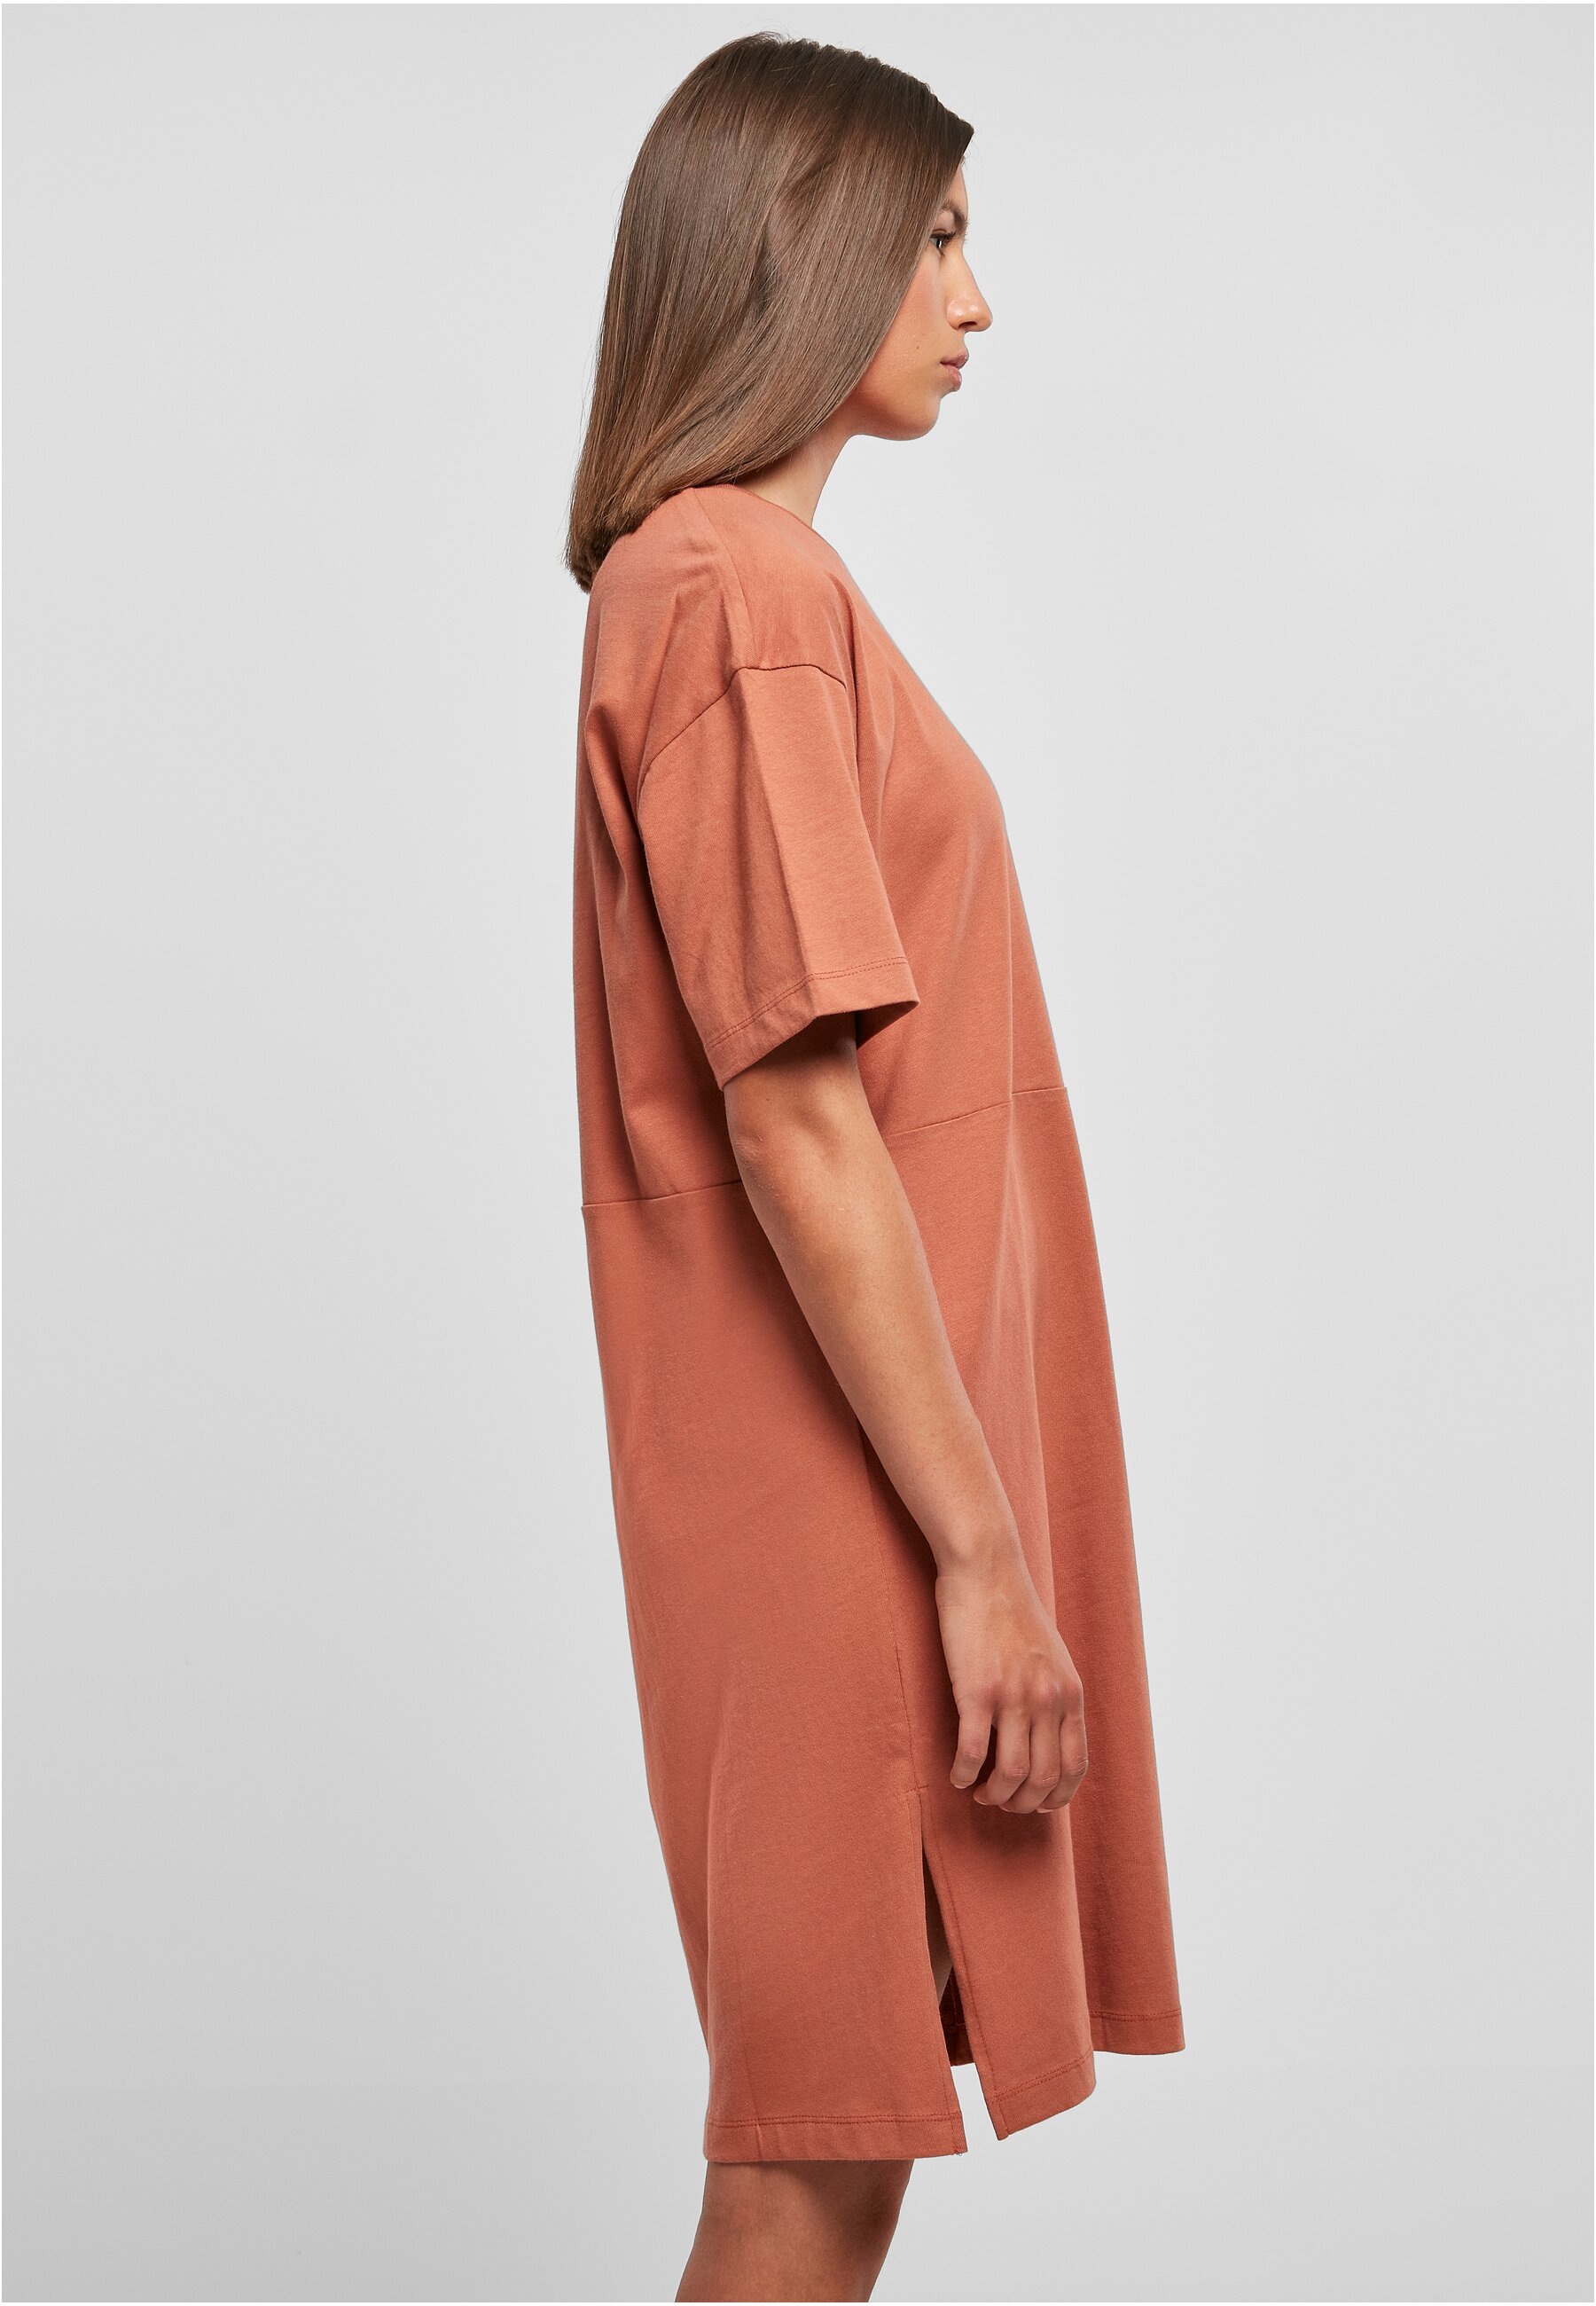 I\'m Organic CLASSICS | Tee tlg.) Jerseykleid »Damen Dress«, walking (1 Ladies Oversized URBAN Slit